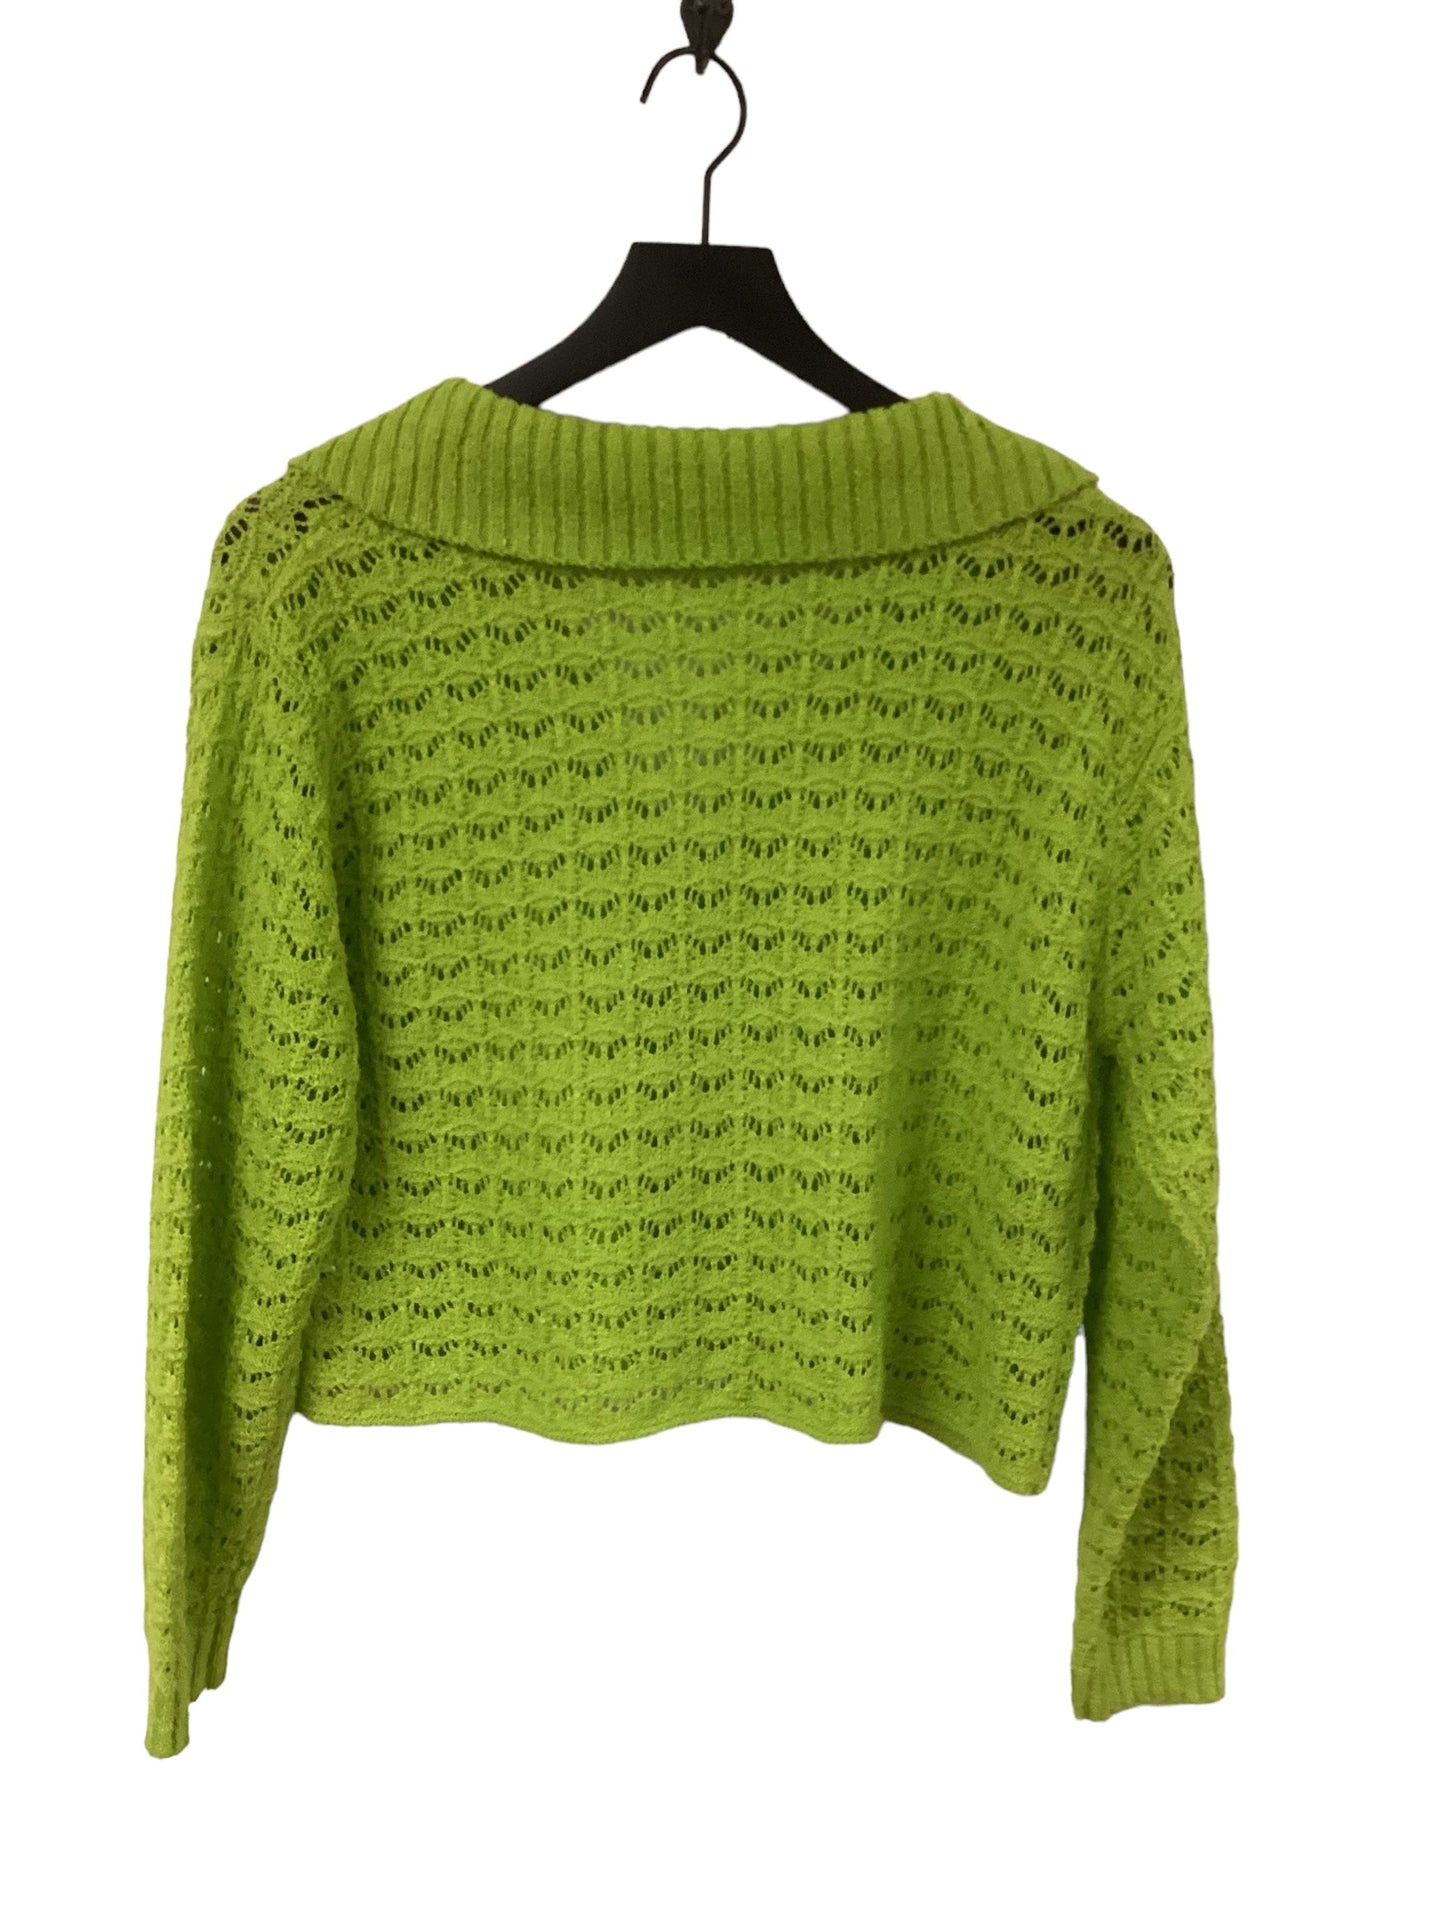 Sweater By En Creme  Size: M